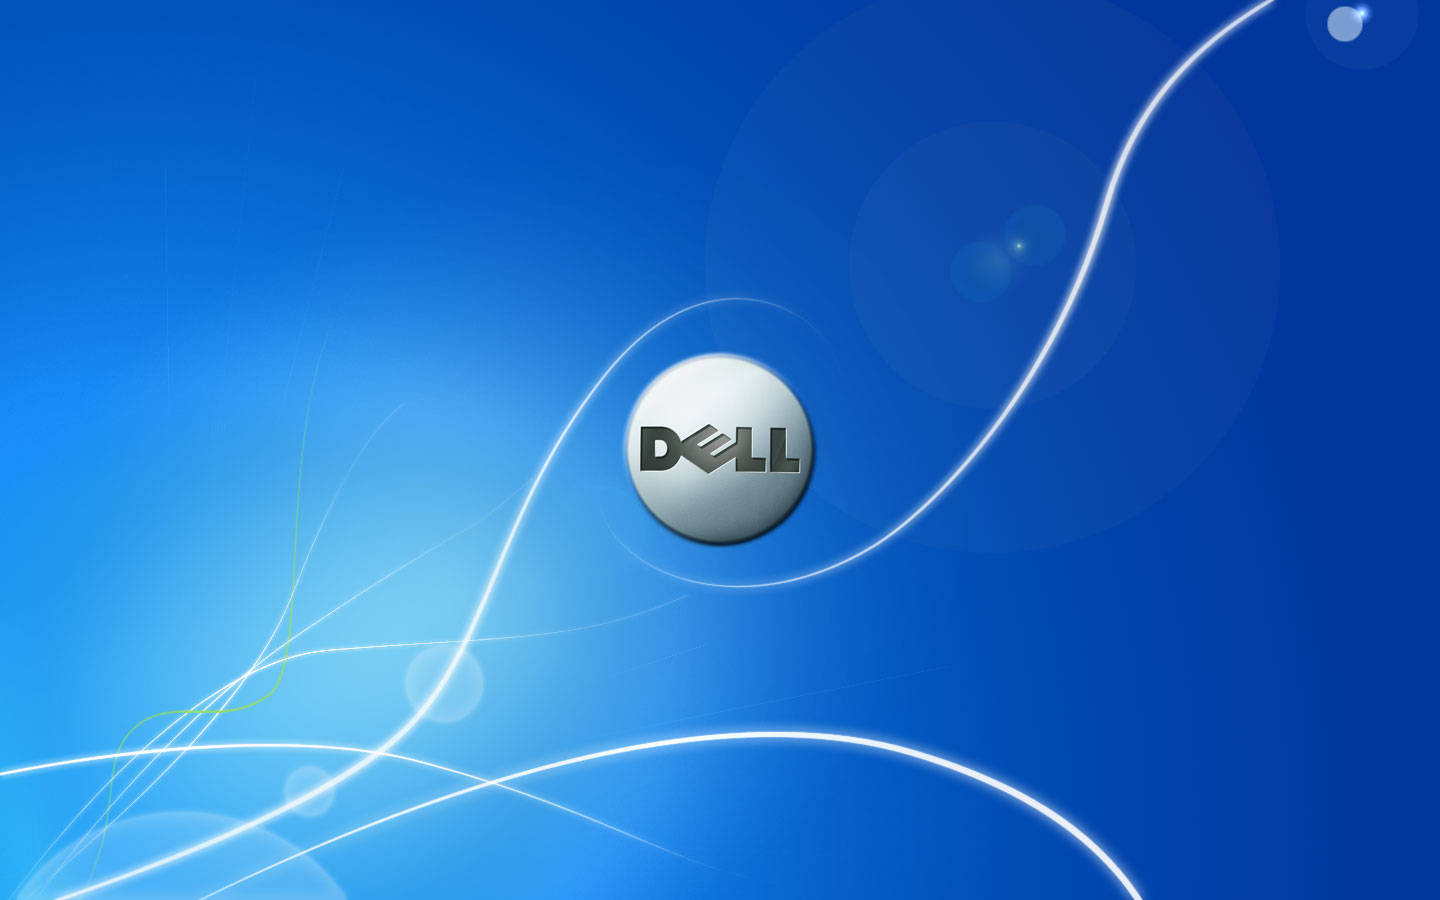 Dell Hd Logo In Bright Blue Wallpaper